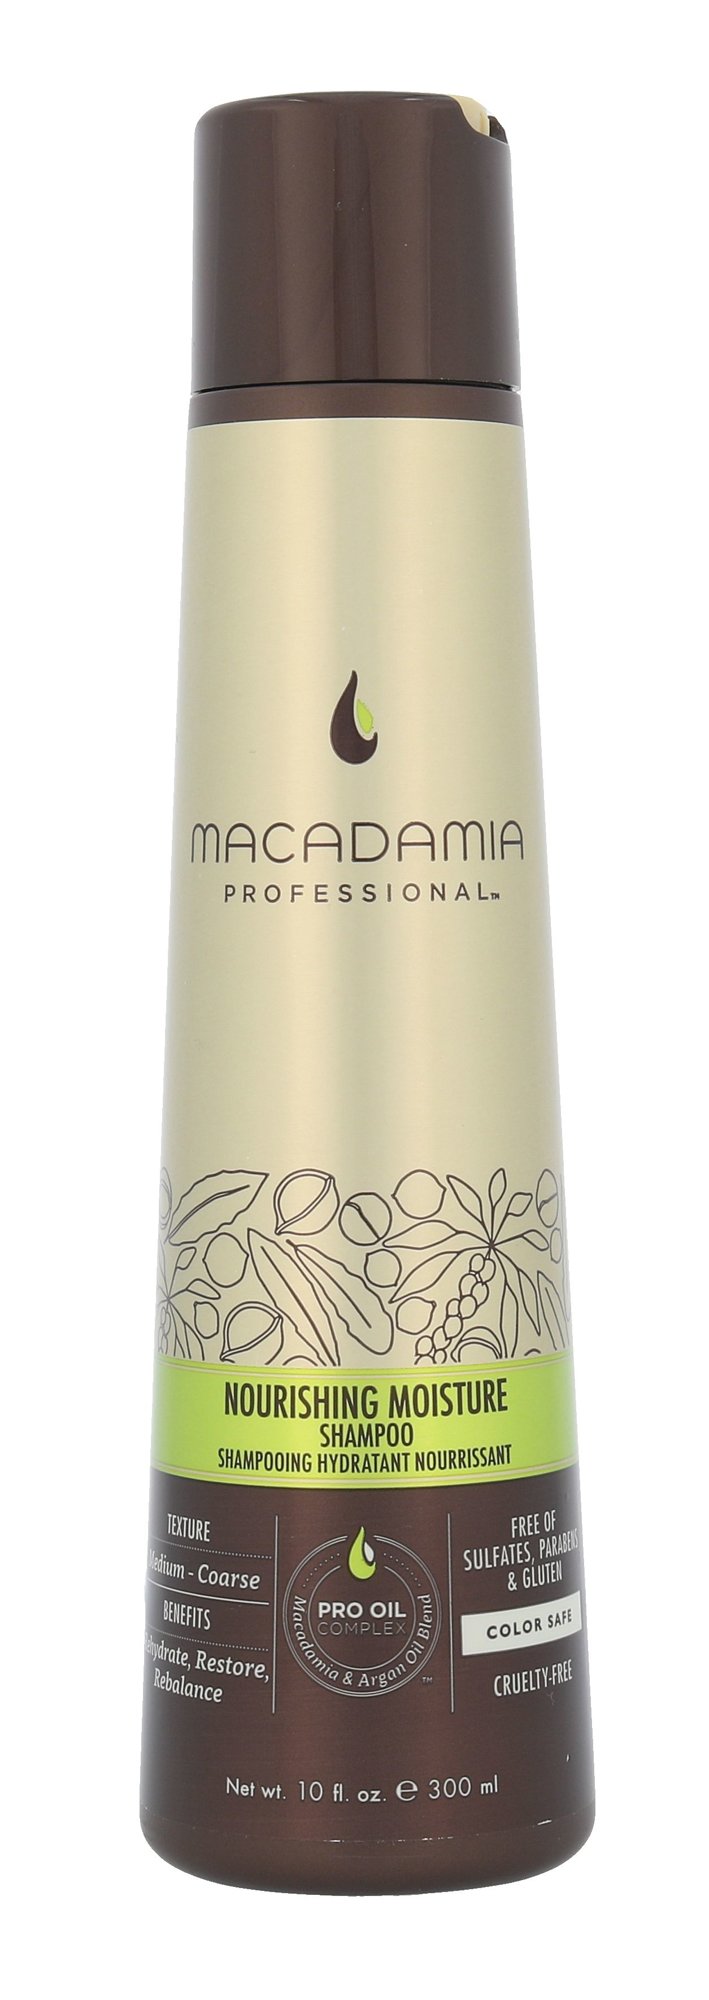 Macadamia Professional Nourishing Moisture šampūnas